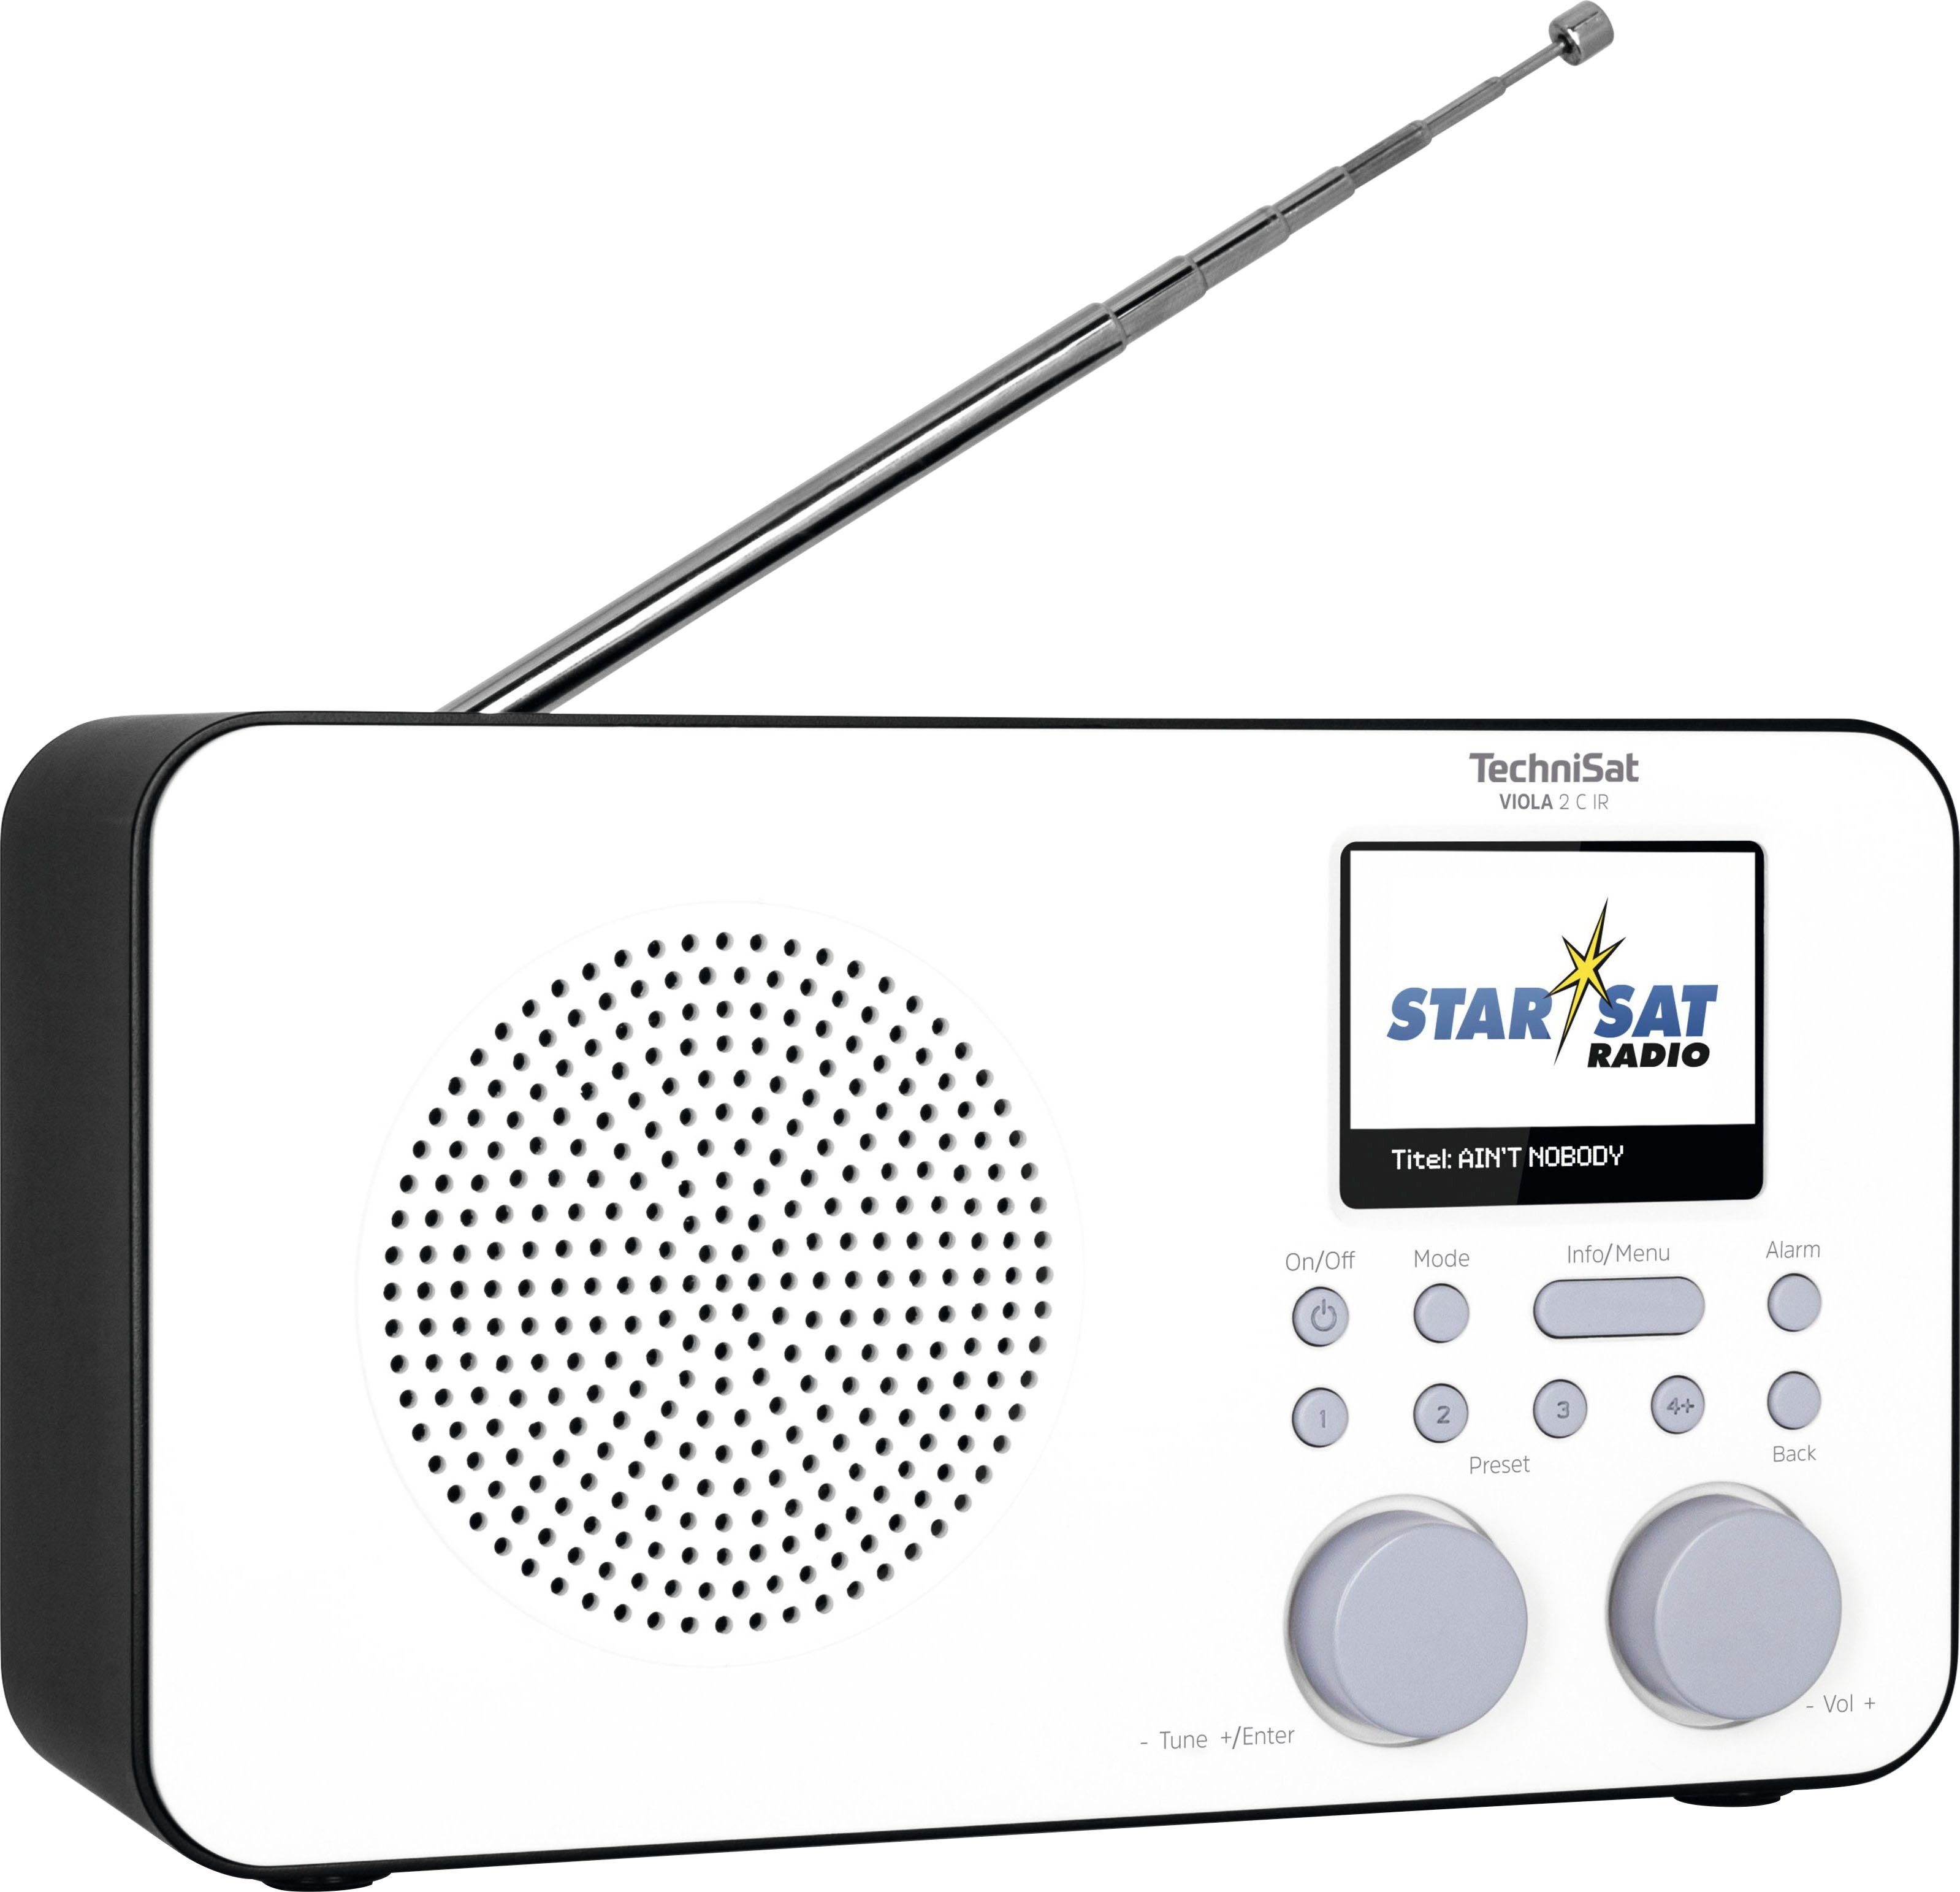 Tragbares (Digitalradio Akku) Internet-Radio mit DAB+, RDS, IR 2 VIOLA (DAB), TechniSat Farbdisplay, mit Internetradio, C UKW